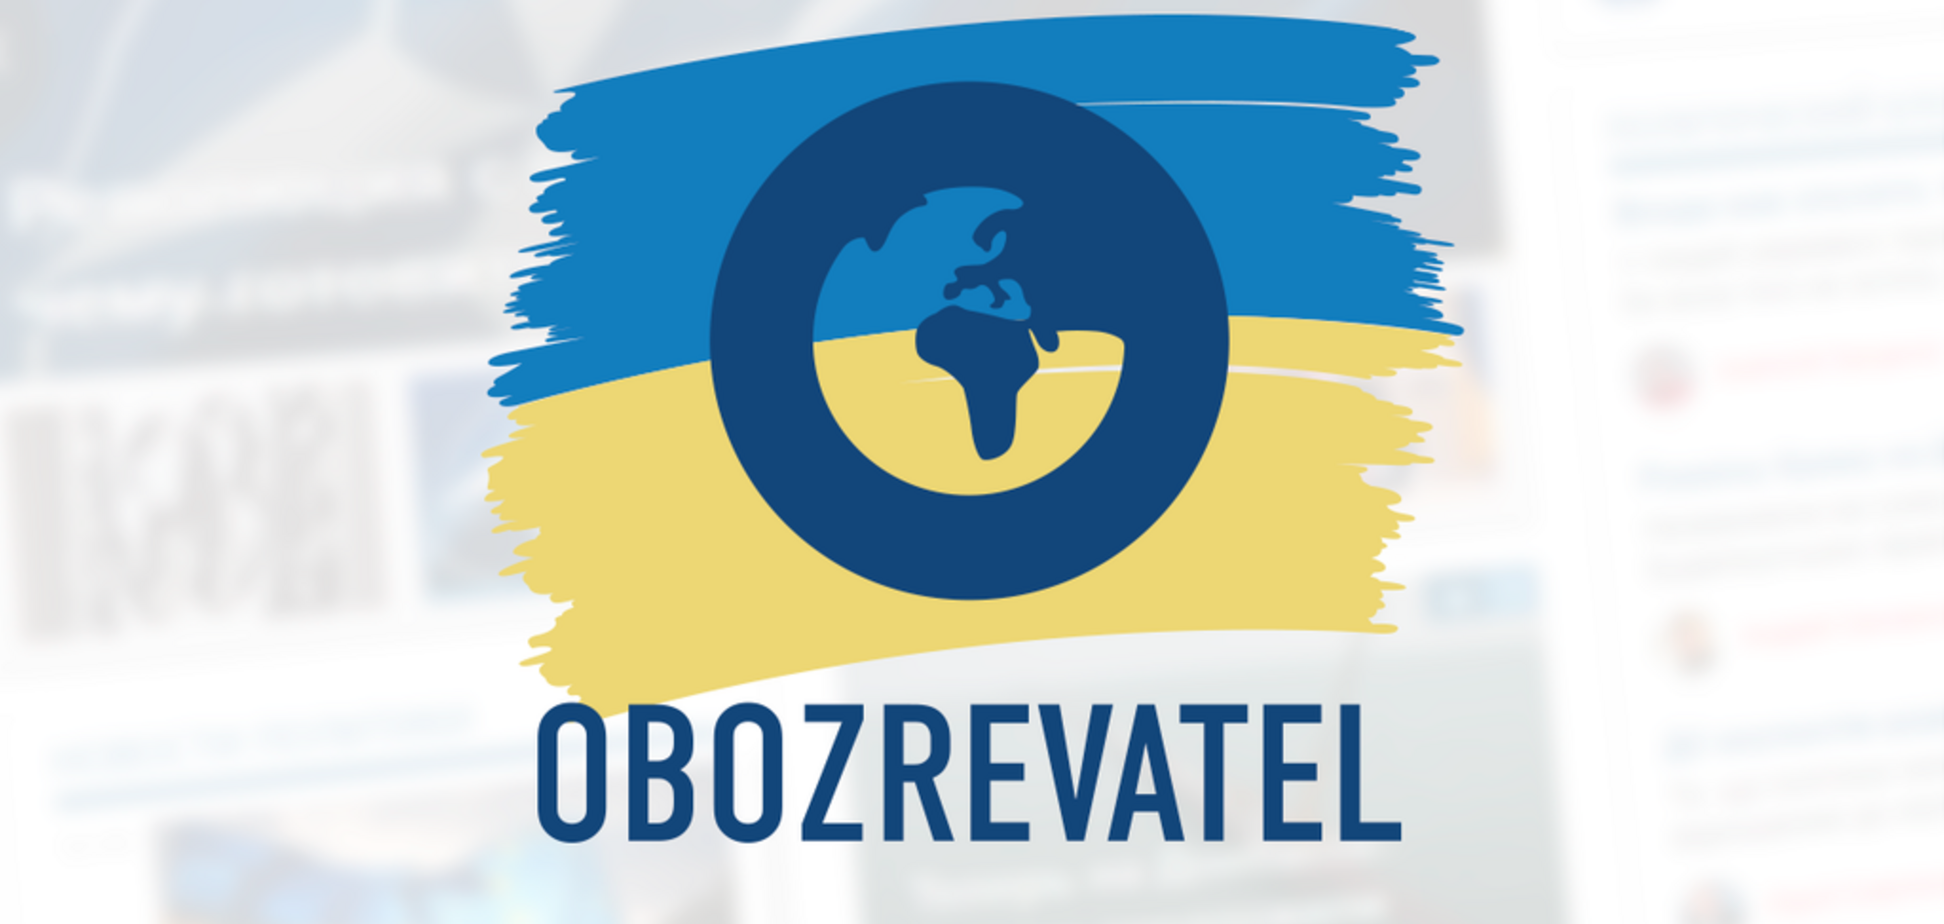 OBOZREVATEL возглавил рейтинг интернет-СМИ в октябре – SimilarWeb